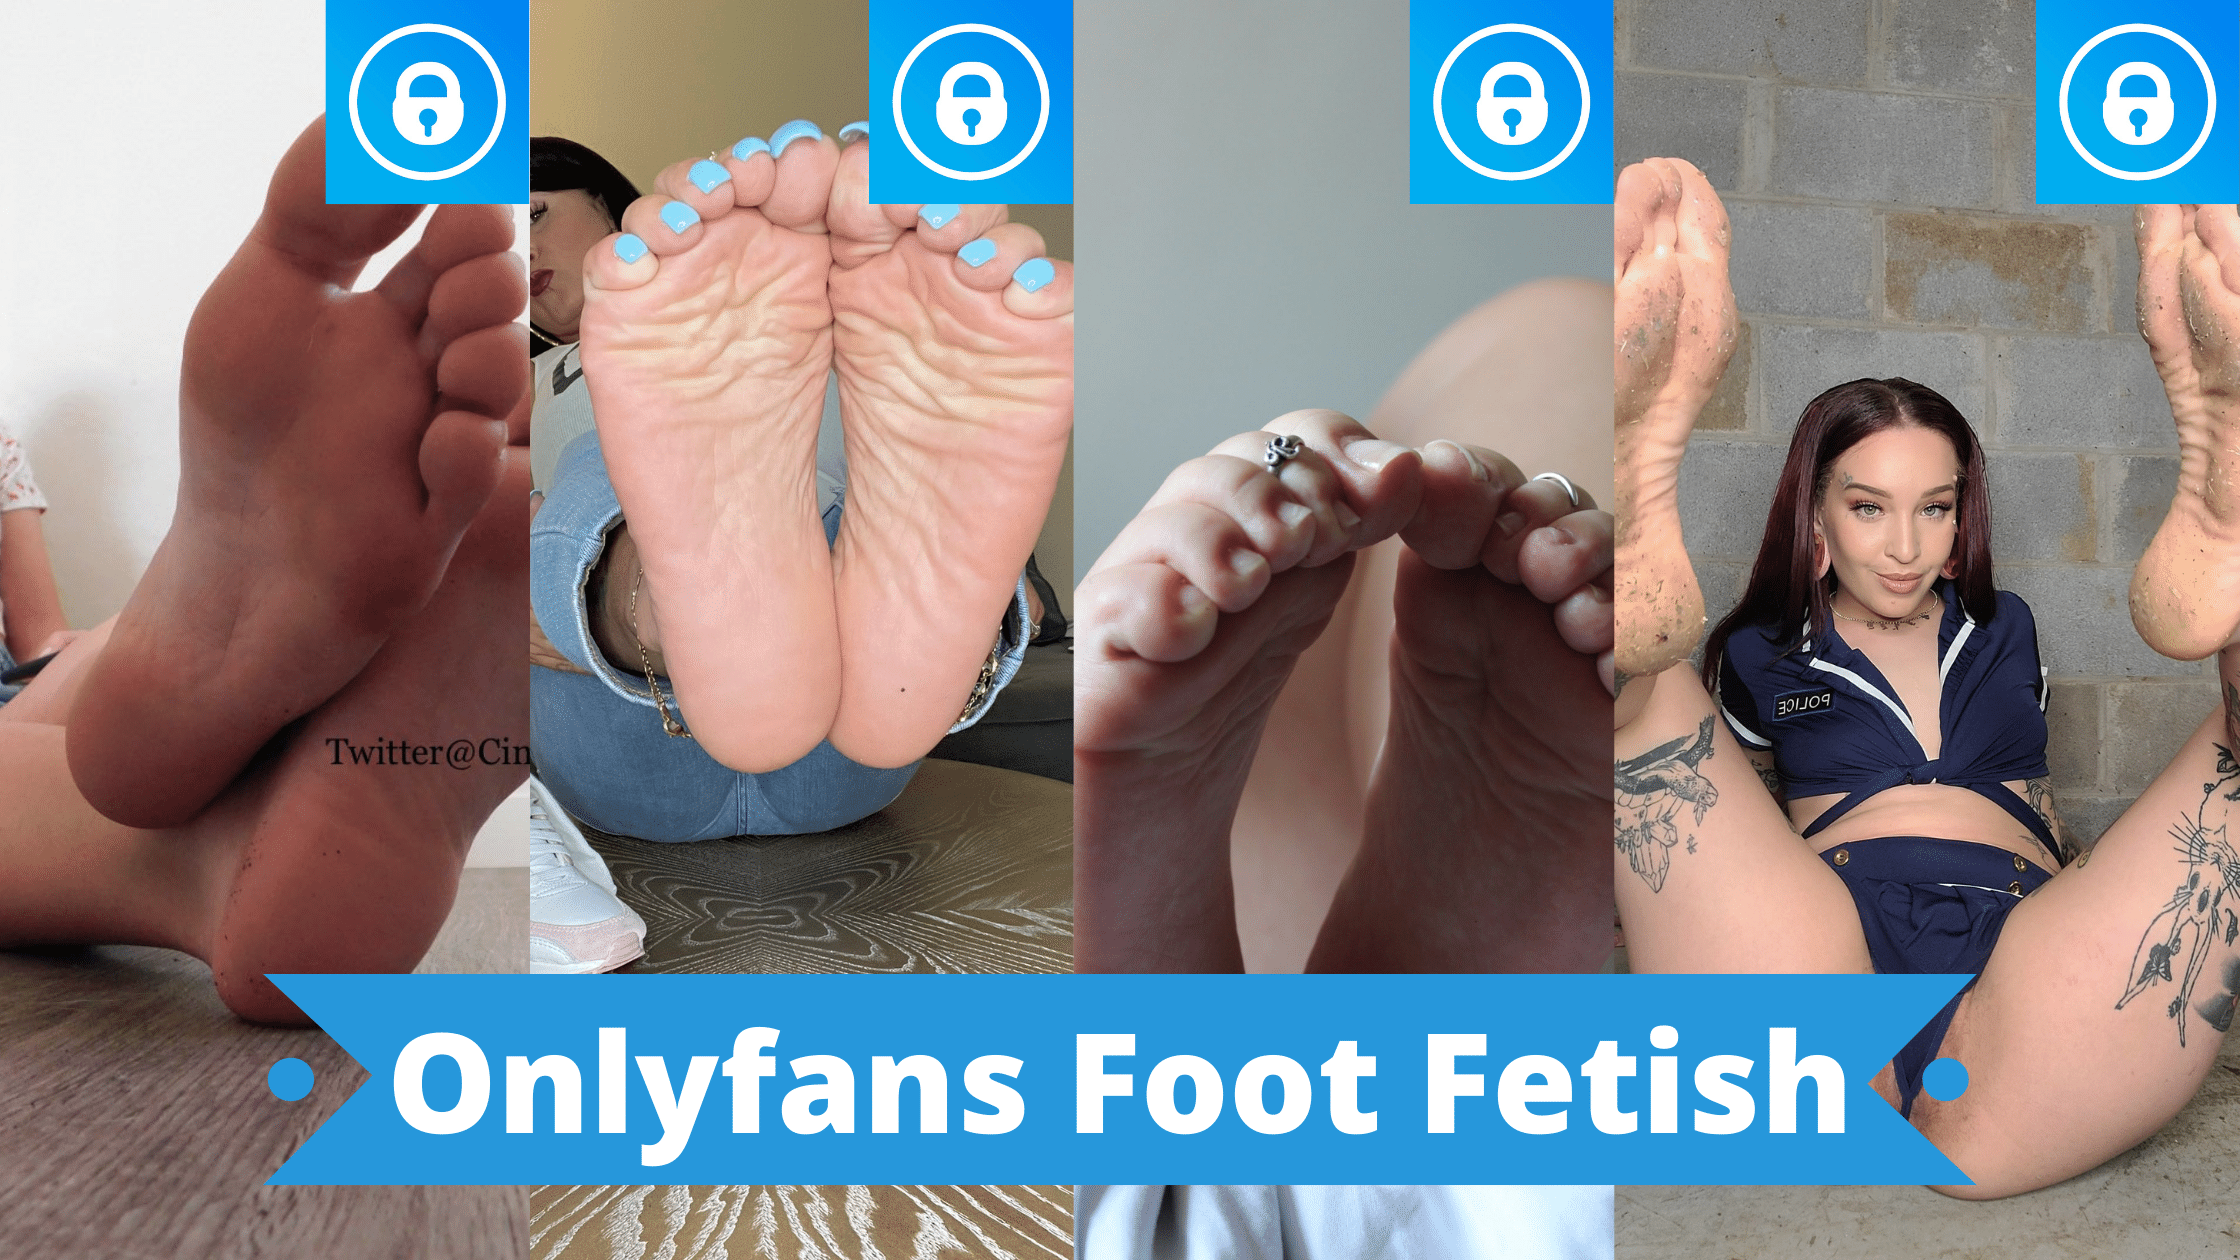 Fans feet pics only. 